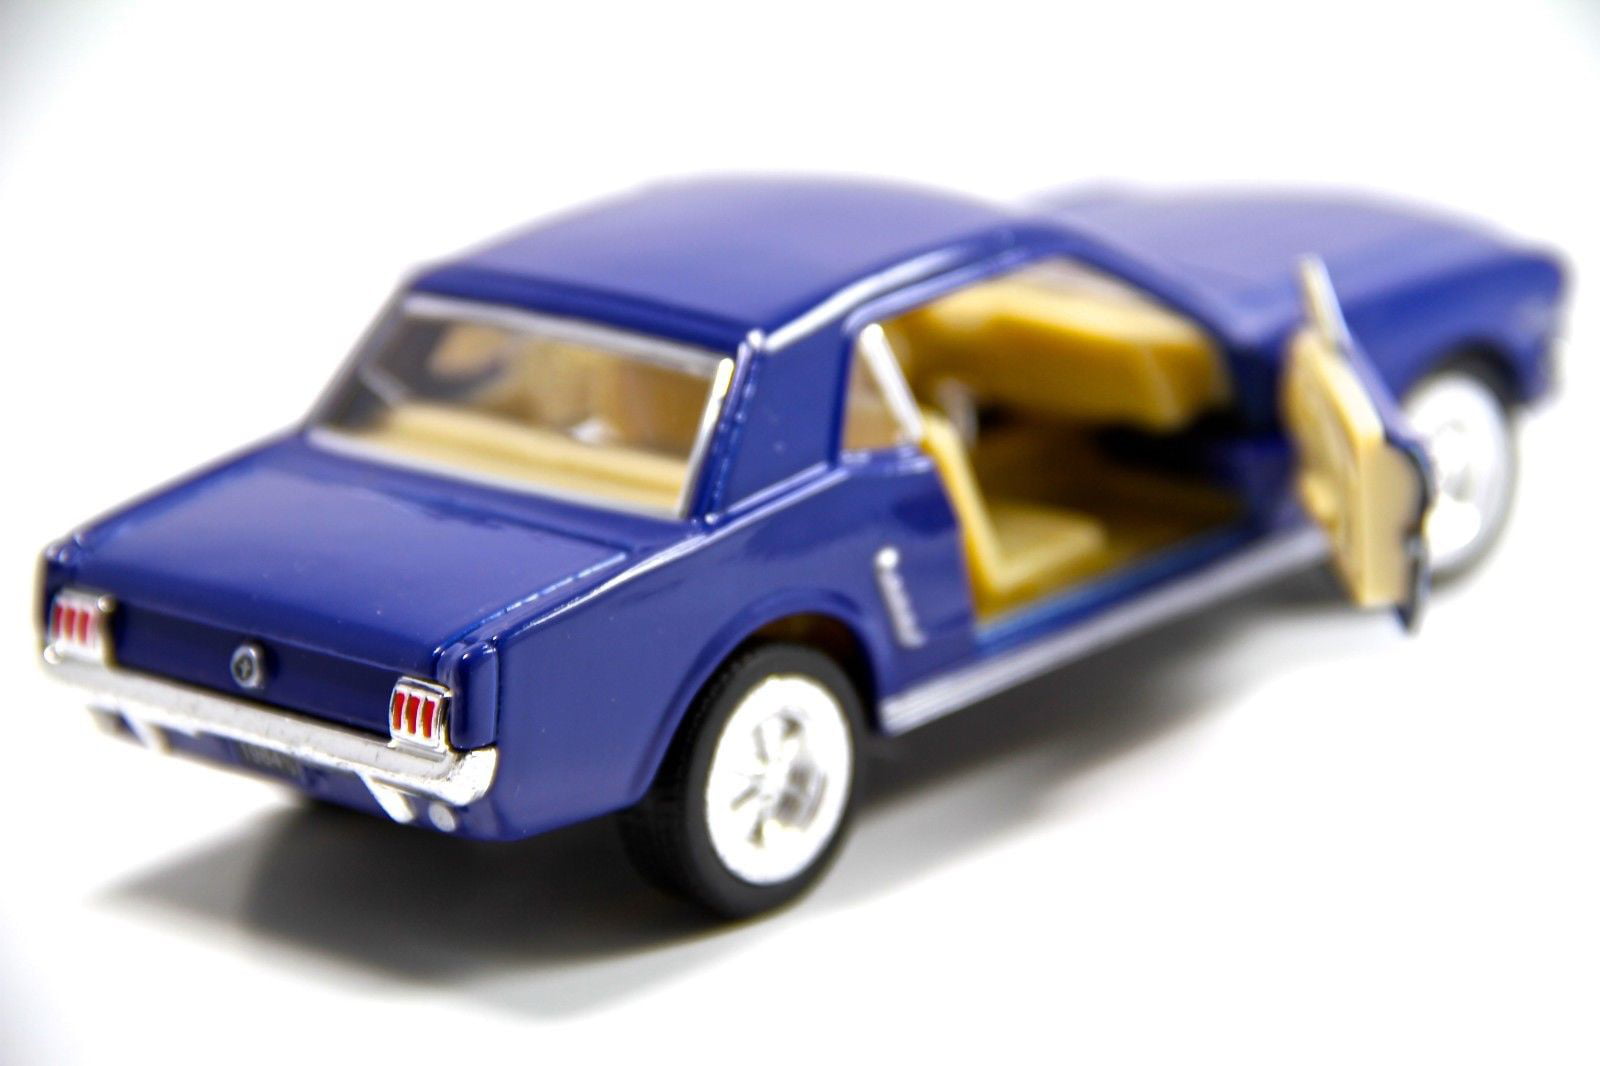 5" Kinsmart 1964 1/2 Ford Mustang Diecast Model Classic Toy Car 1:36 Black Blue 